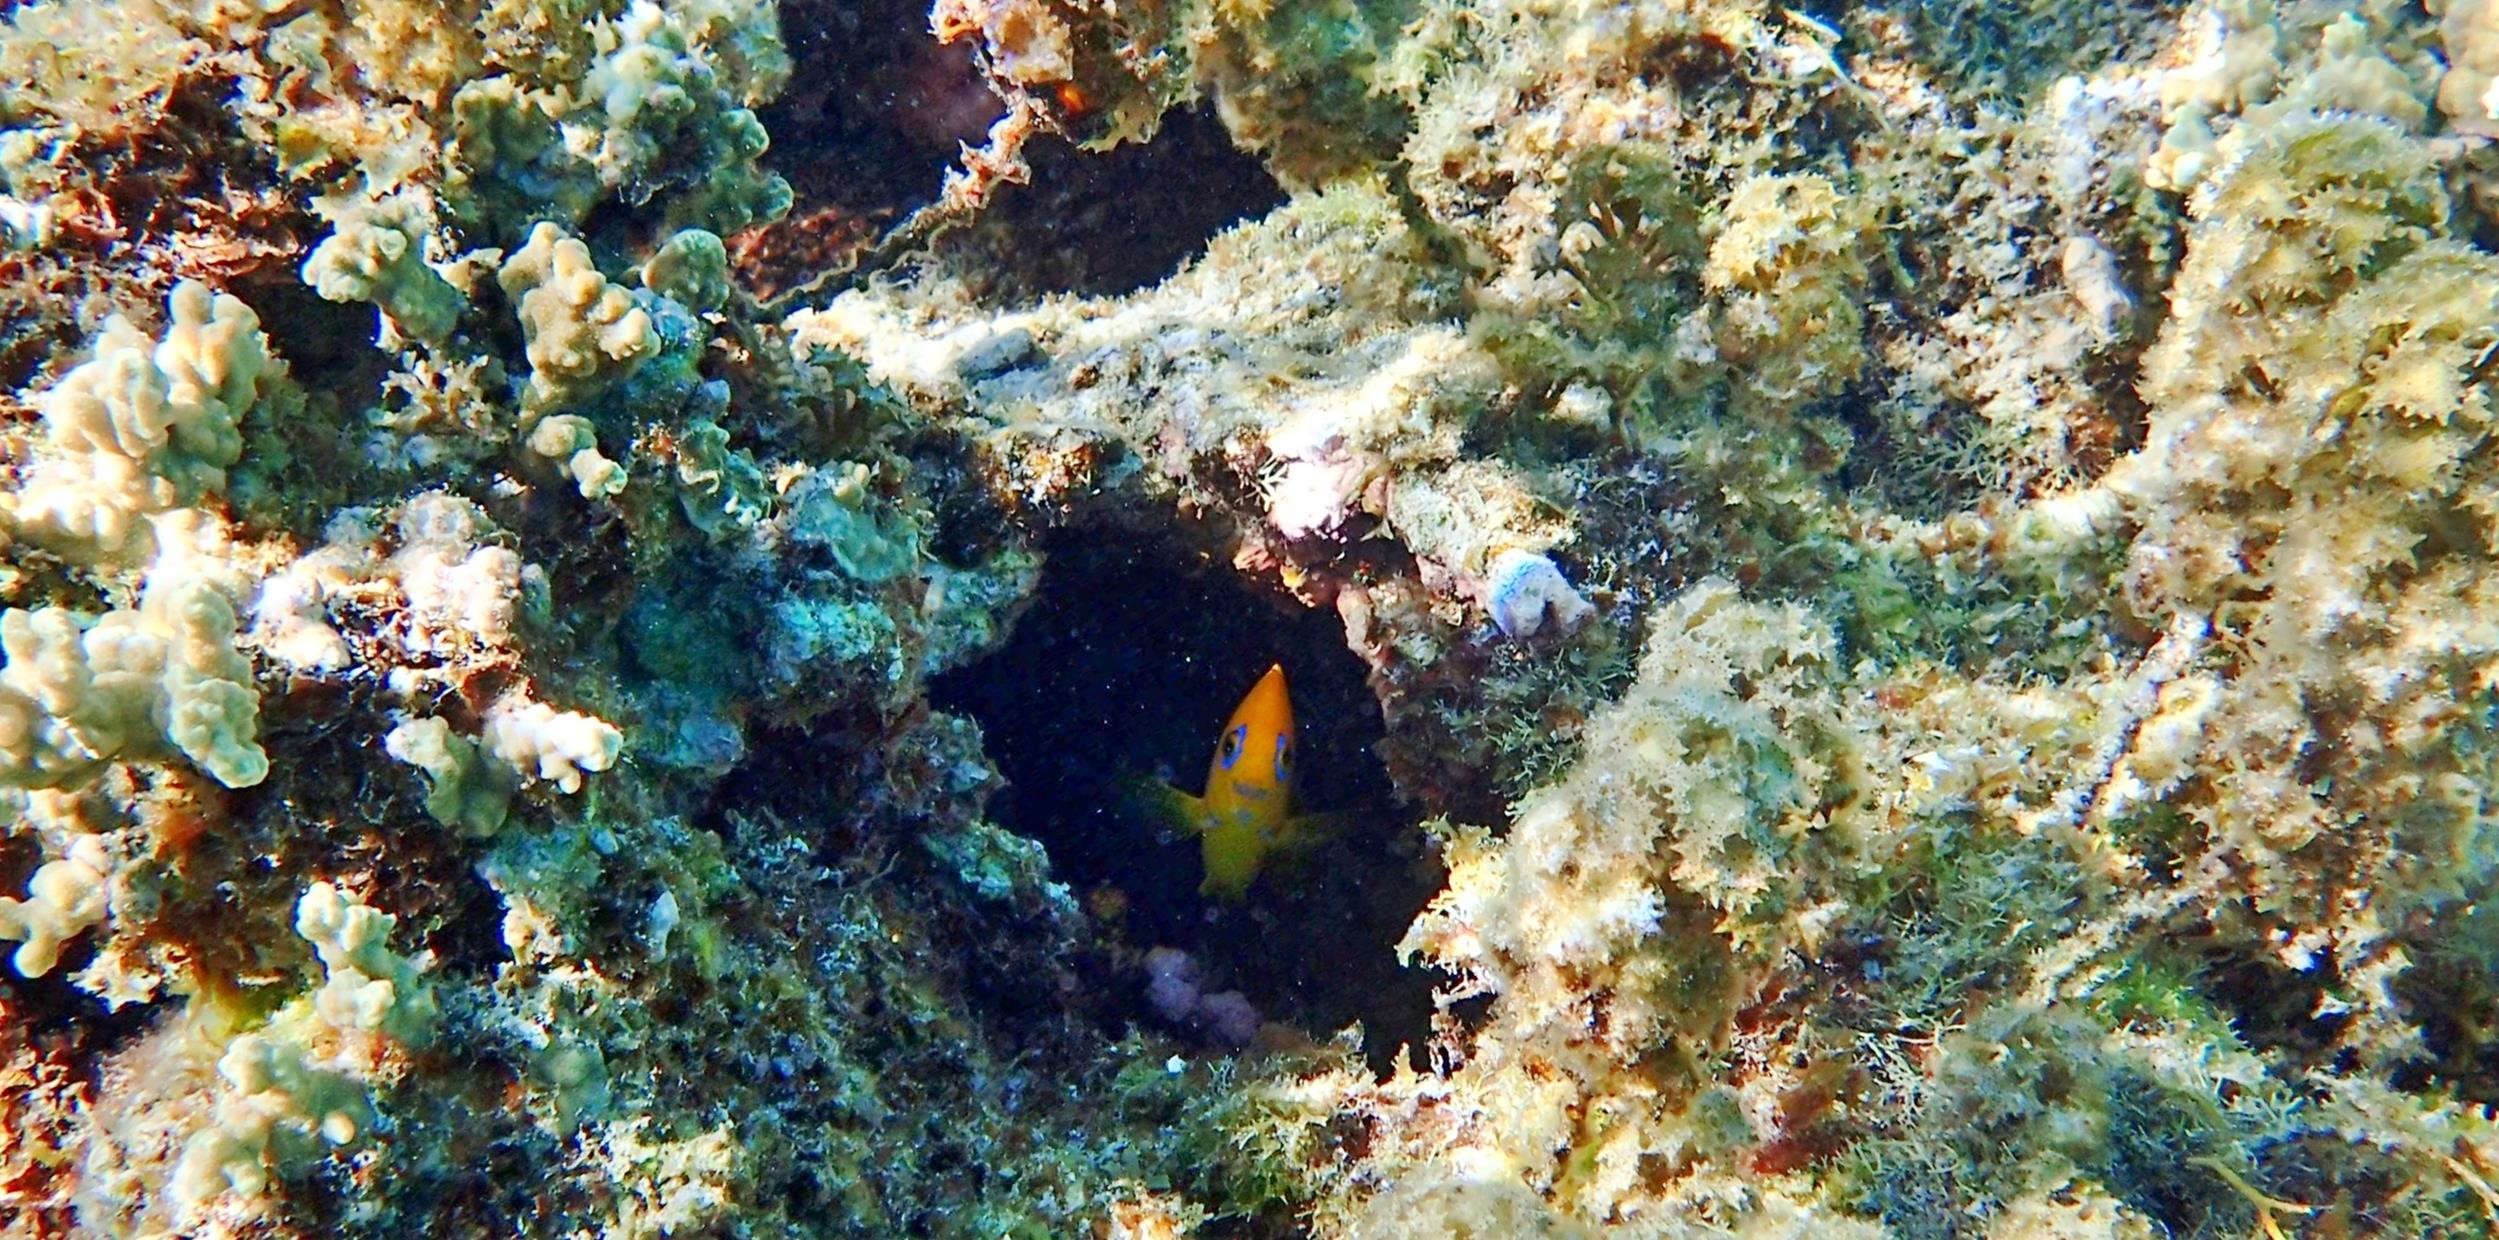 Lemonpeel angelfish were very shy